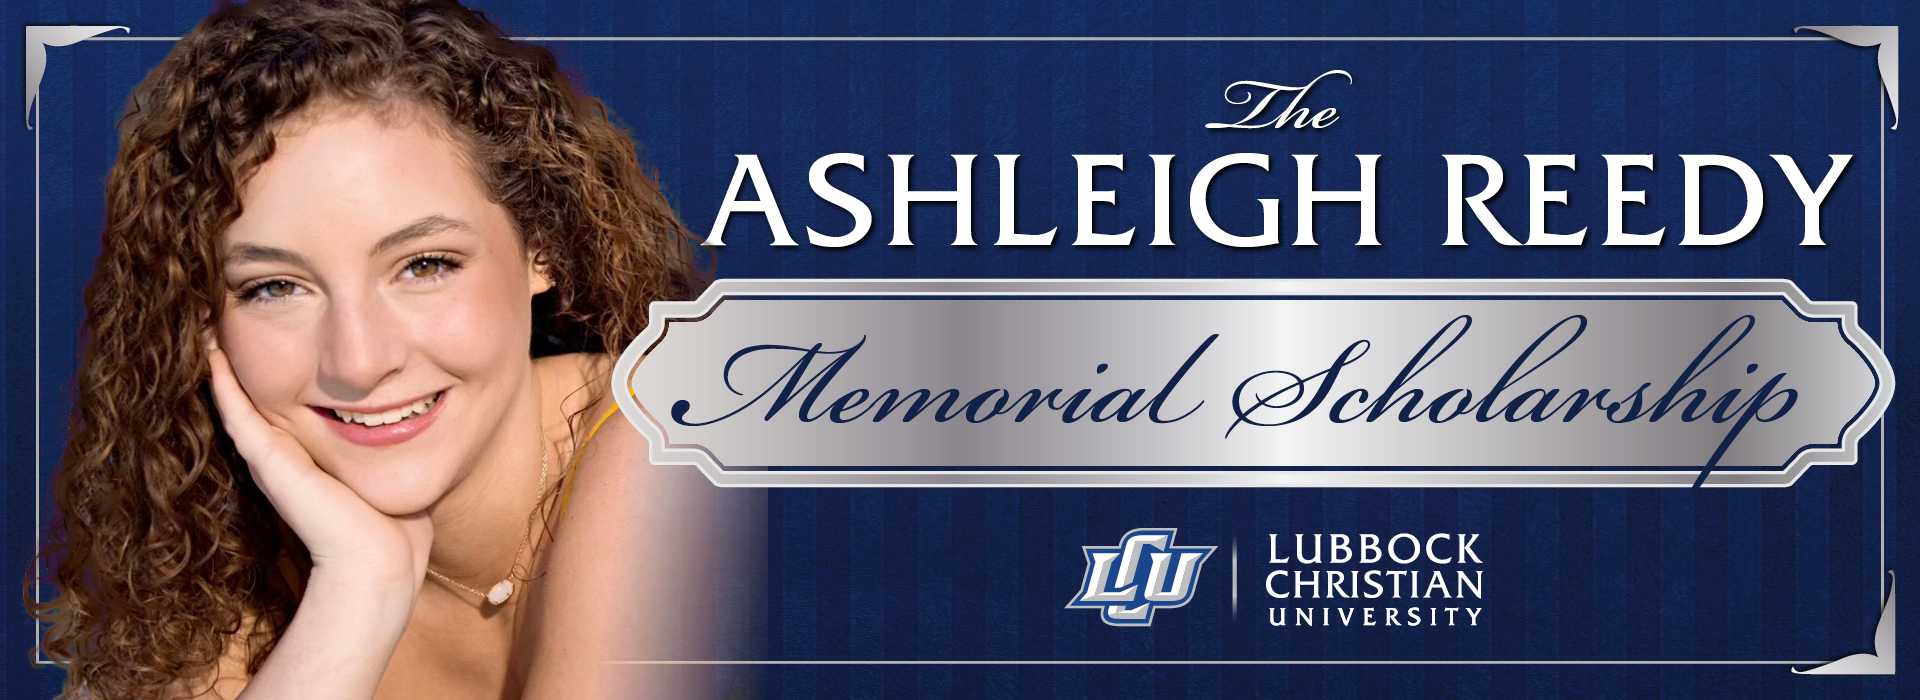 Ashleigh Reedy Scholarship Banner